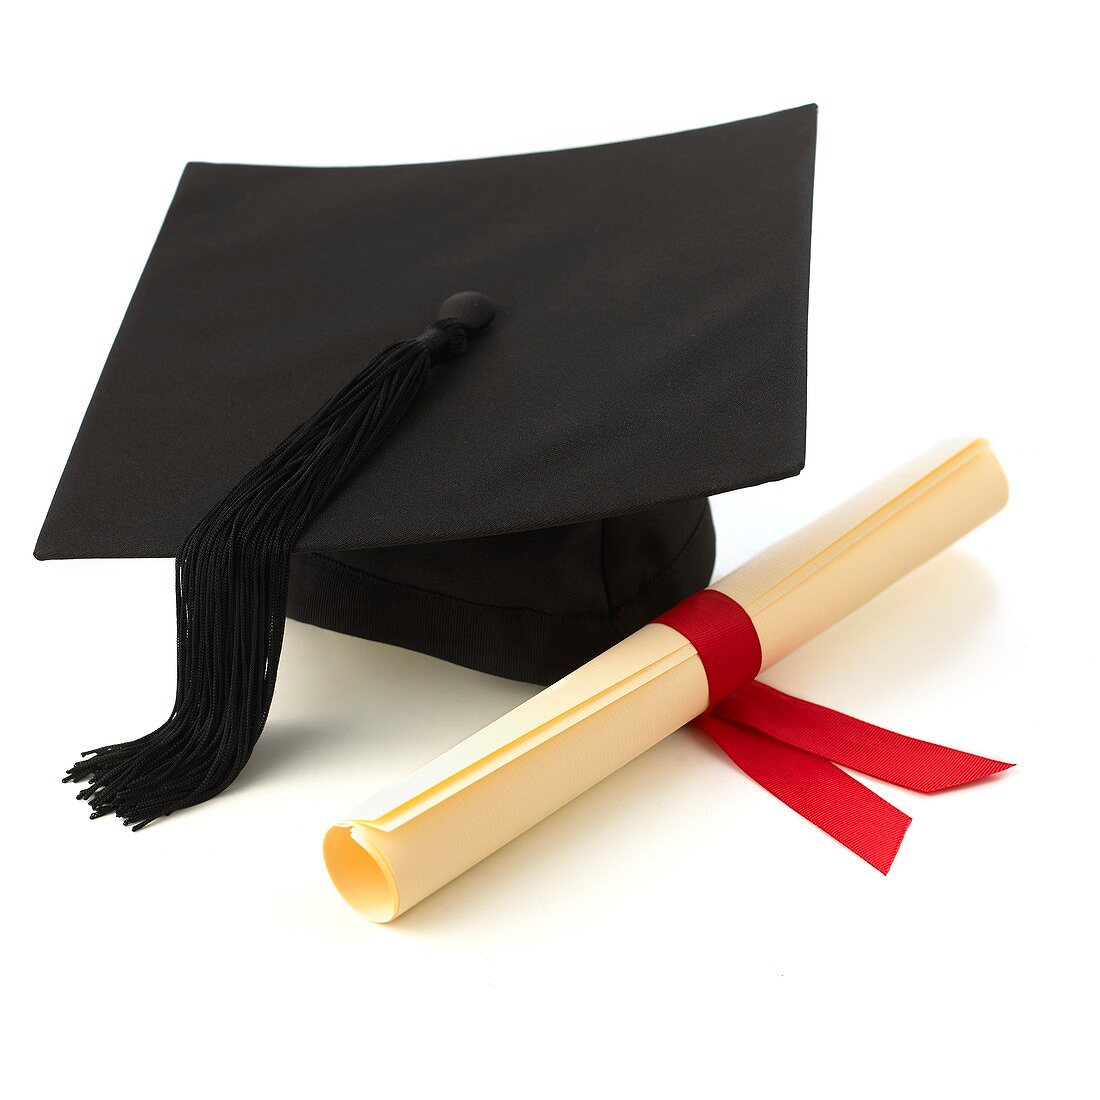 Graduation,conceptual image